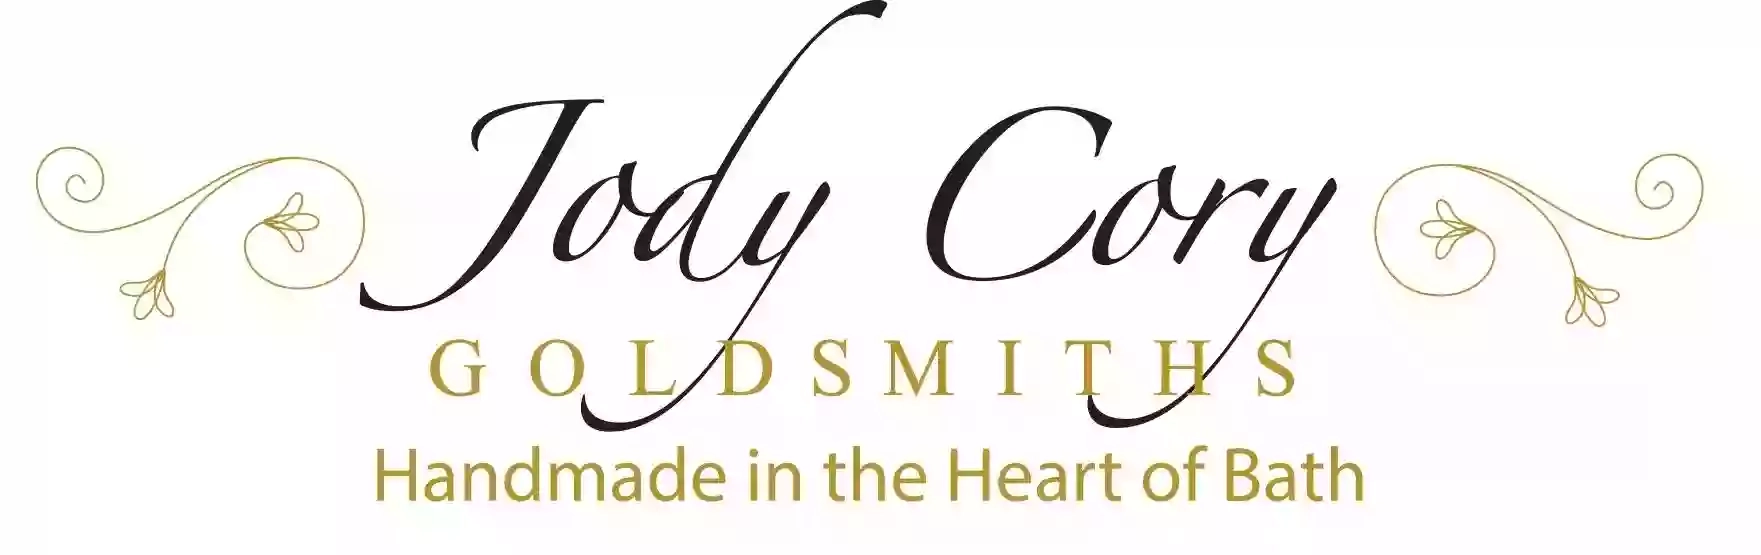 Jody Cory Goldsmiths Ltd